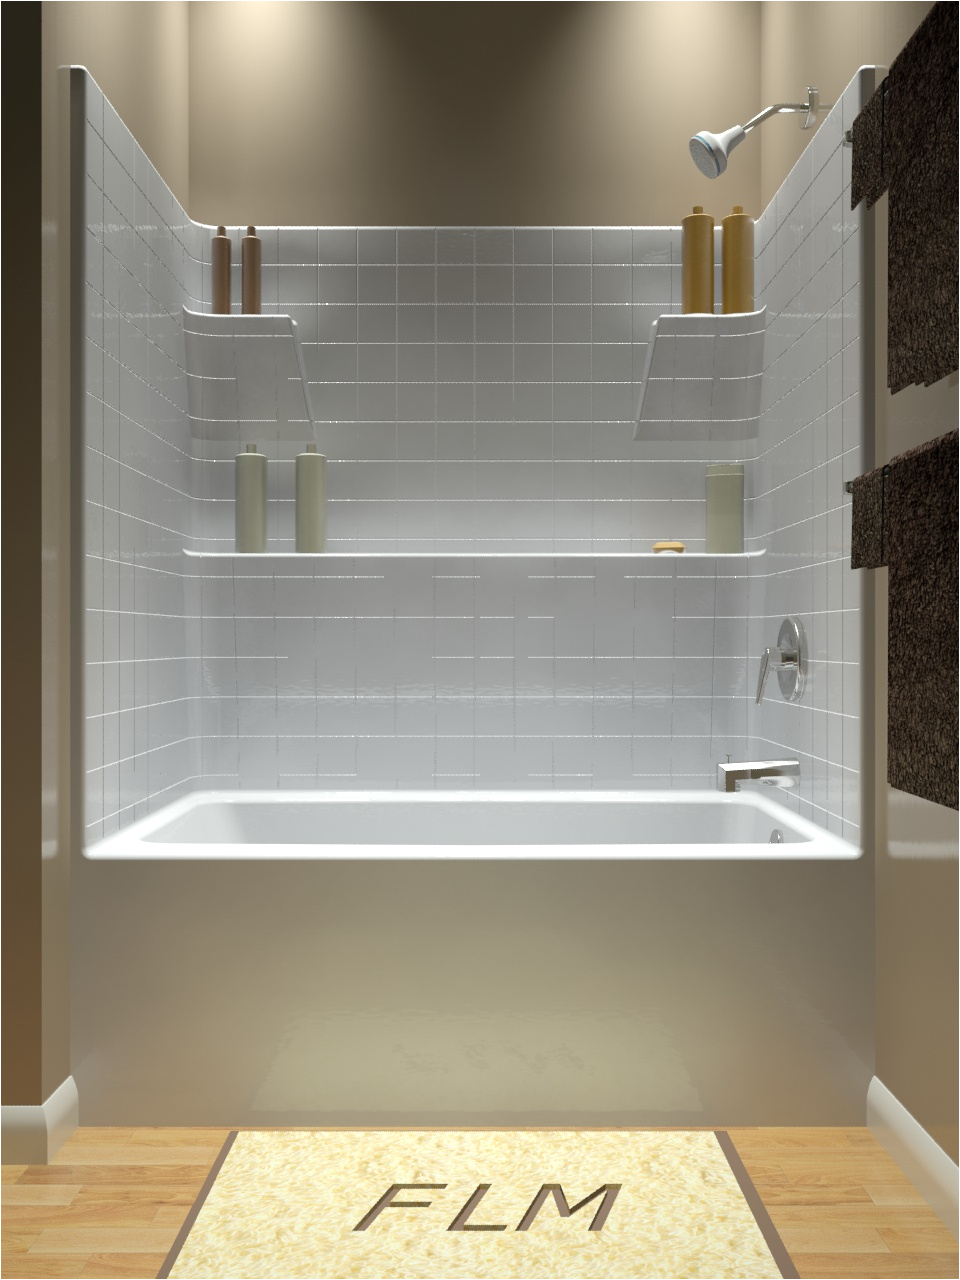 Bathtub Surround 54 Inch 54 Inch Tub Shower Bo Lowes and Acrylic Units Home